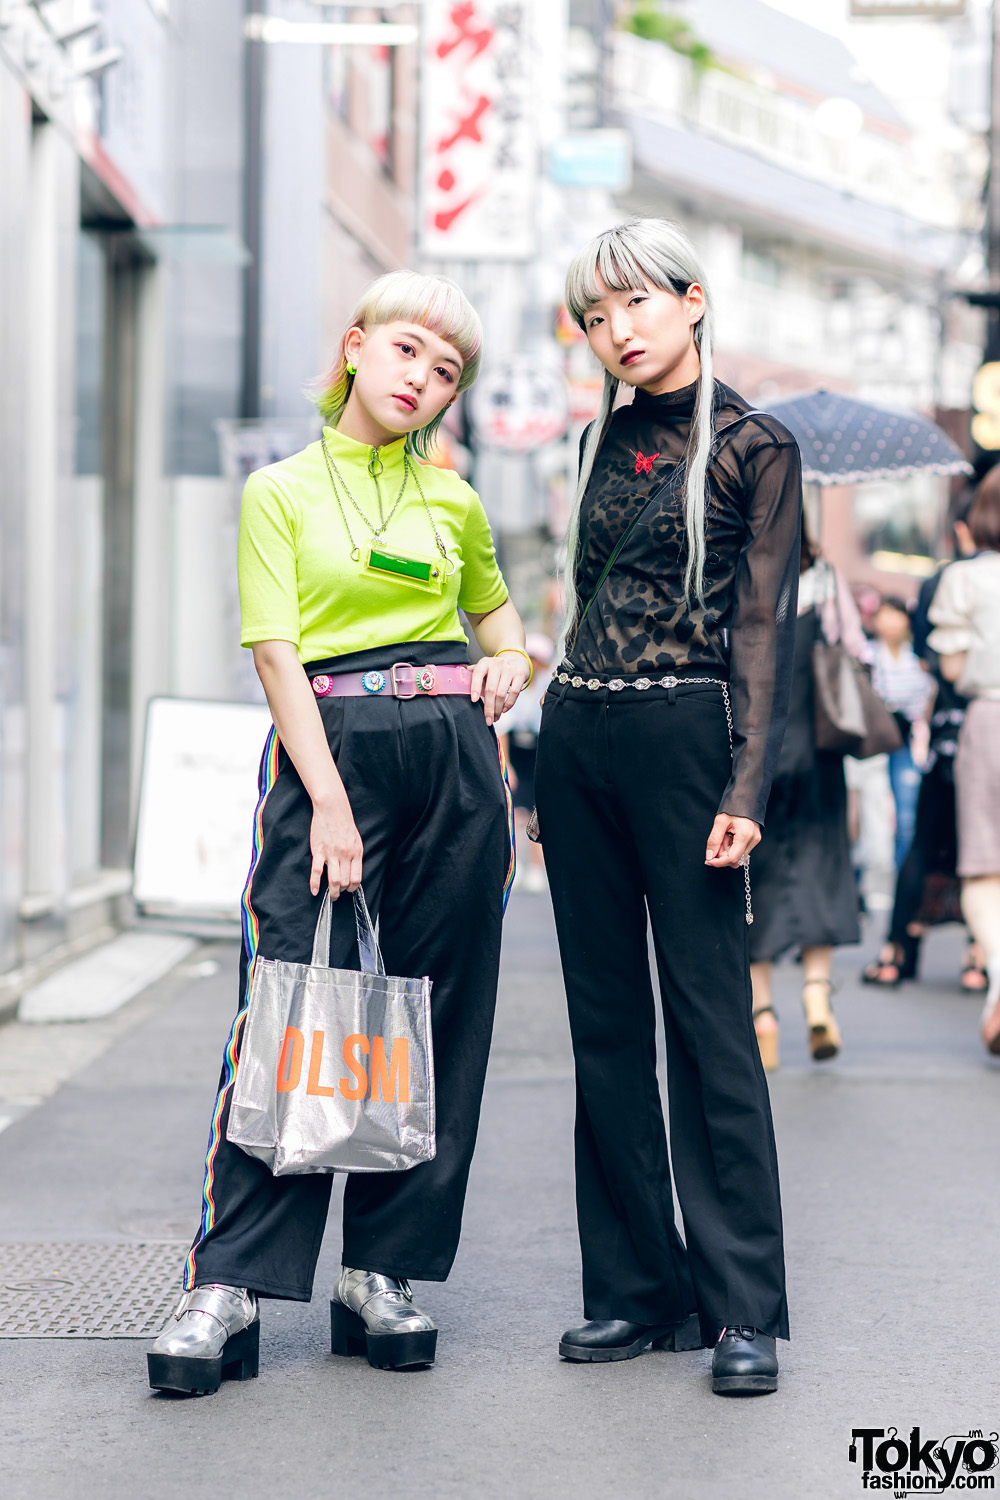 Harajuku Girls Streetwear Styles w/ Neon Hair, LED Necklace, Sheer Blouse, Bottle Cap Belt, DLSM Bag